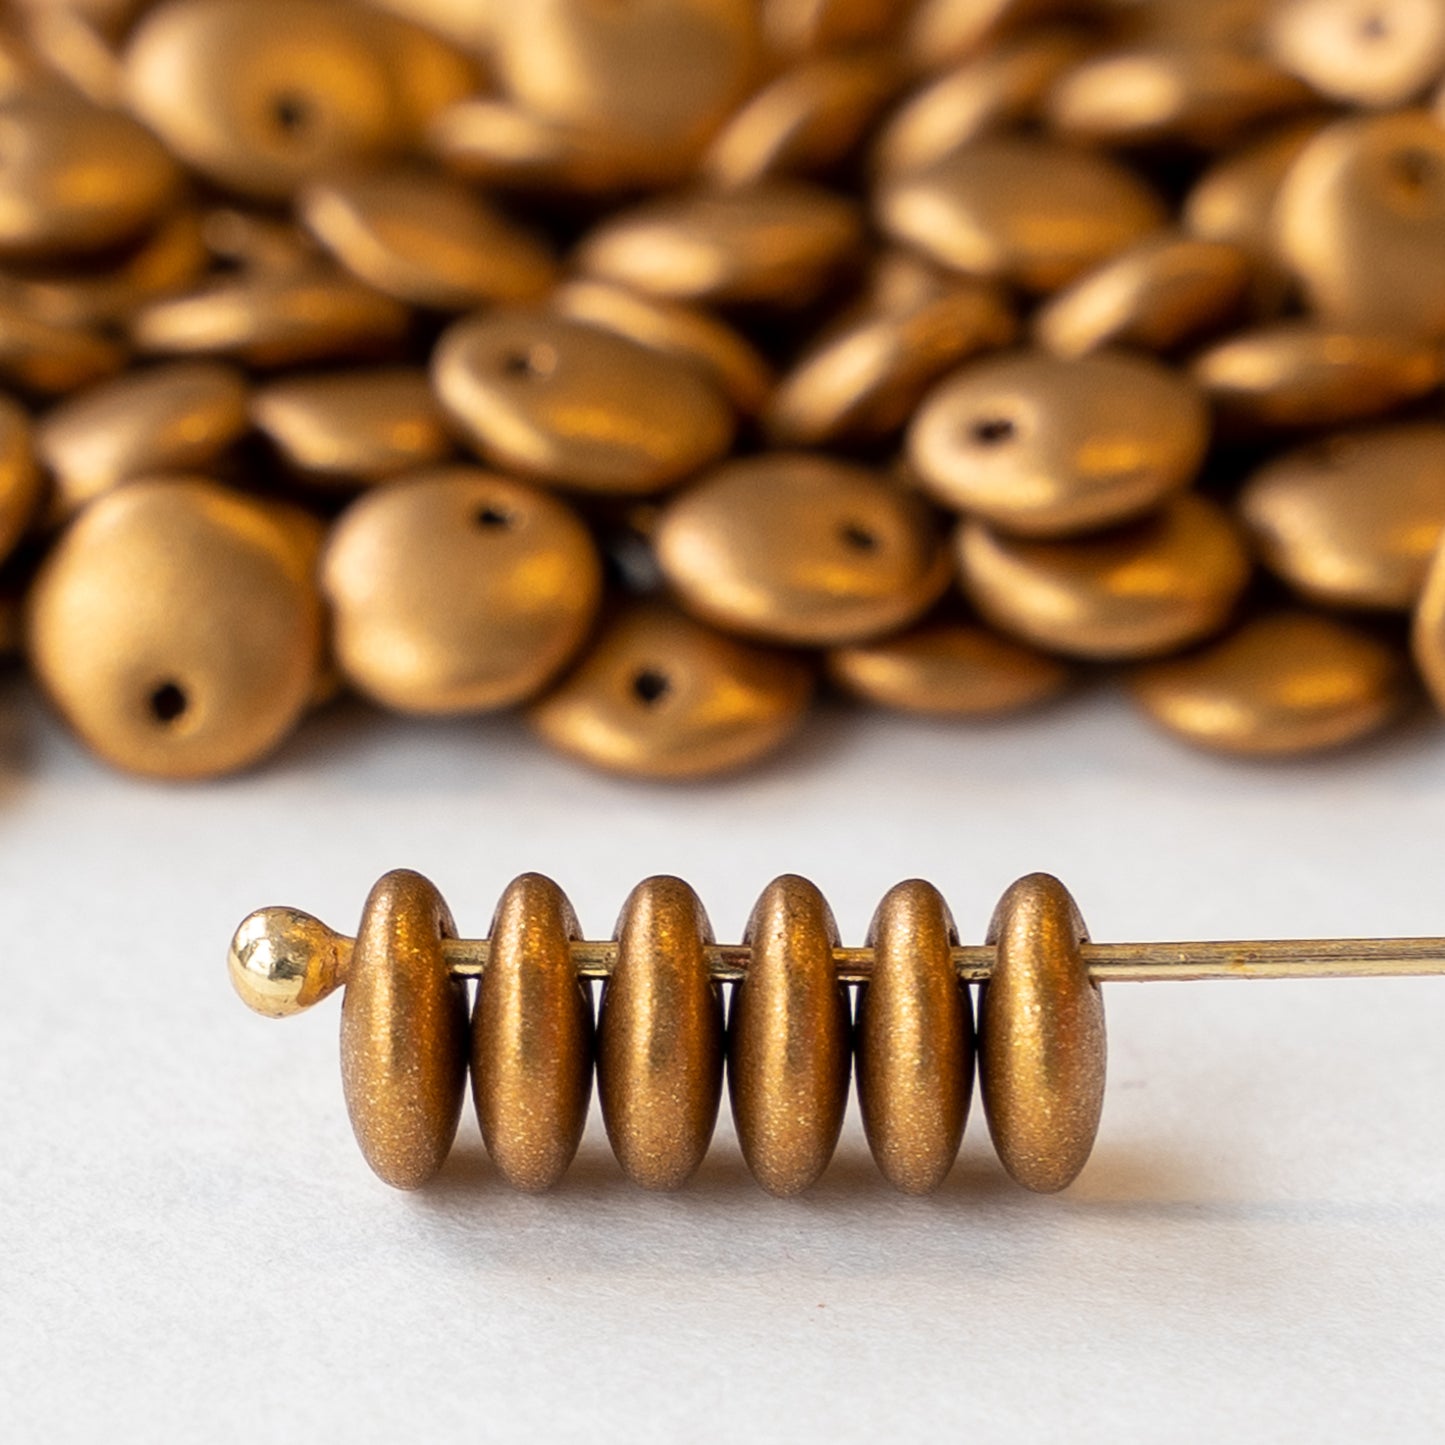 6mm Lentil Drop Beads - Antique Gold Matte - 10 grams ~80 beads